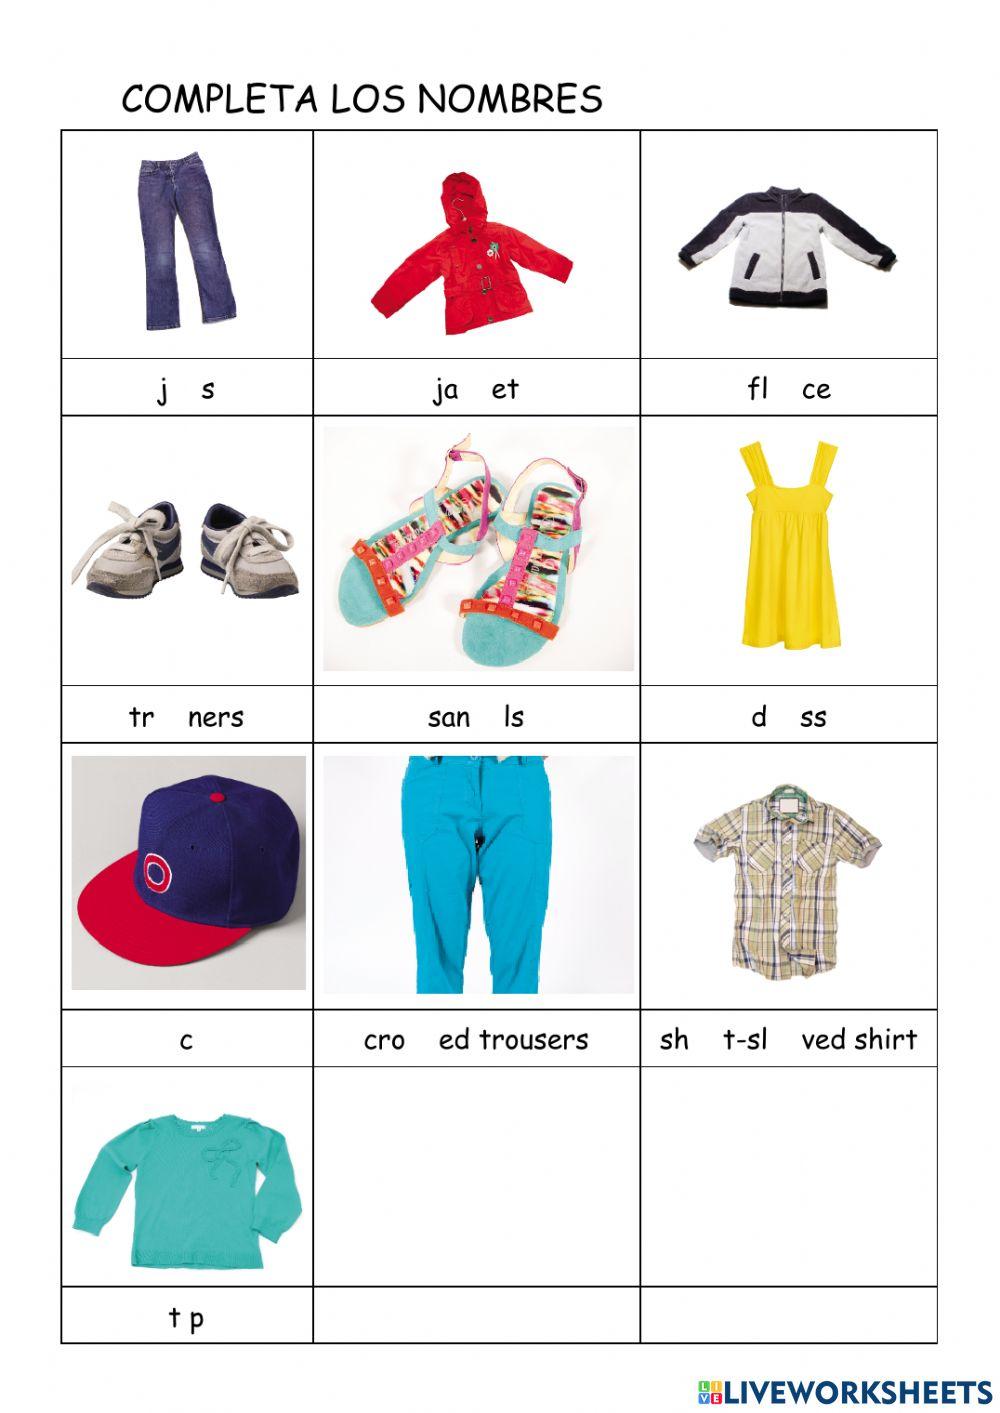 Vocabulario ropa